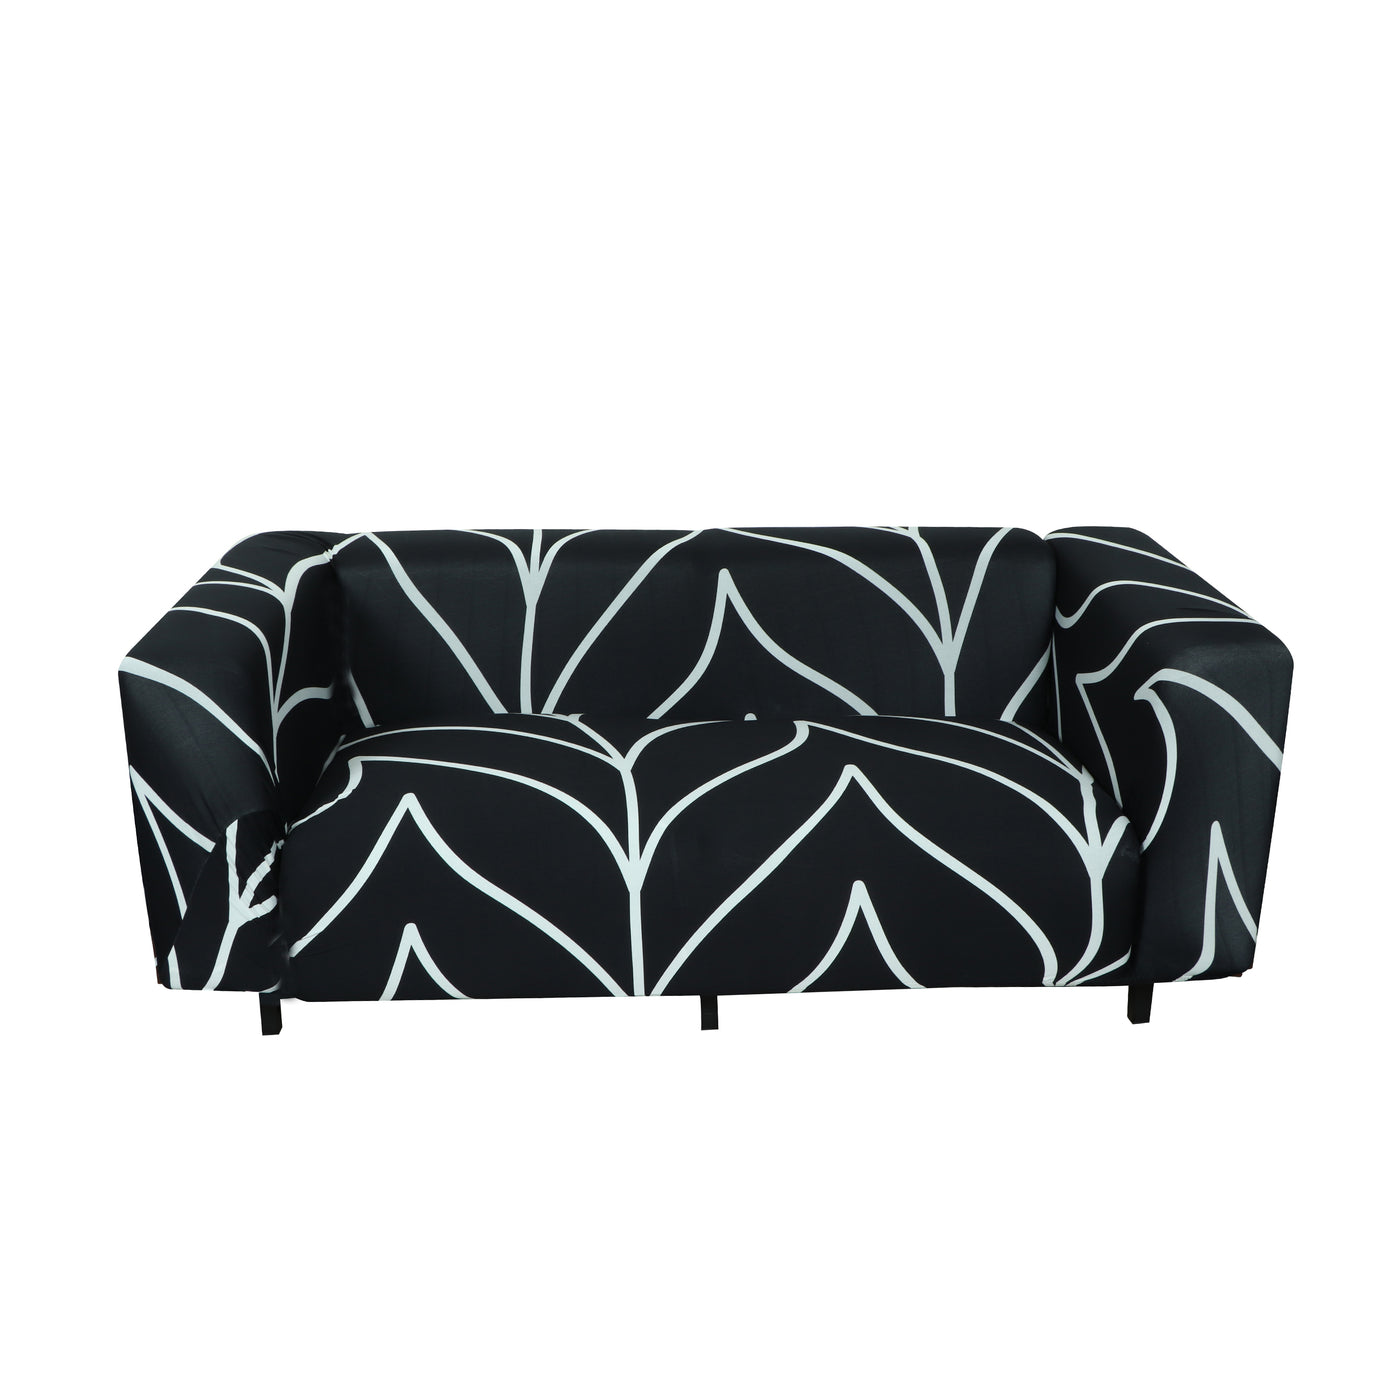 Printed Sofa Cover - Black Onyx